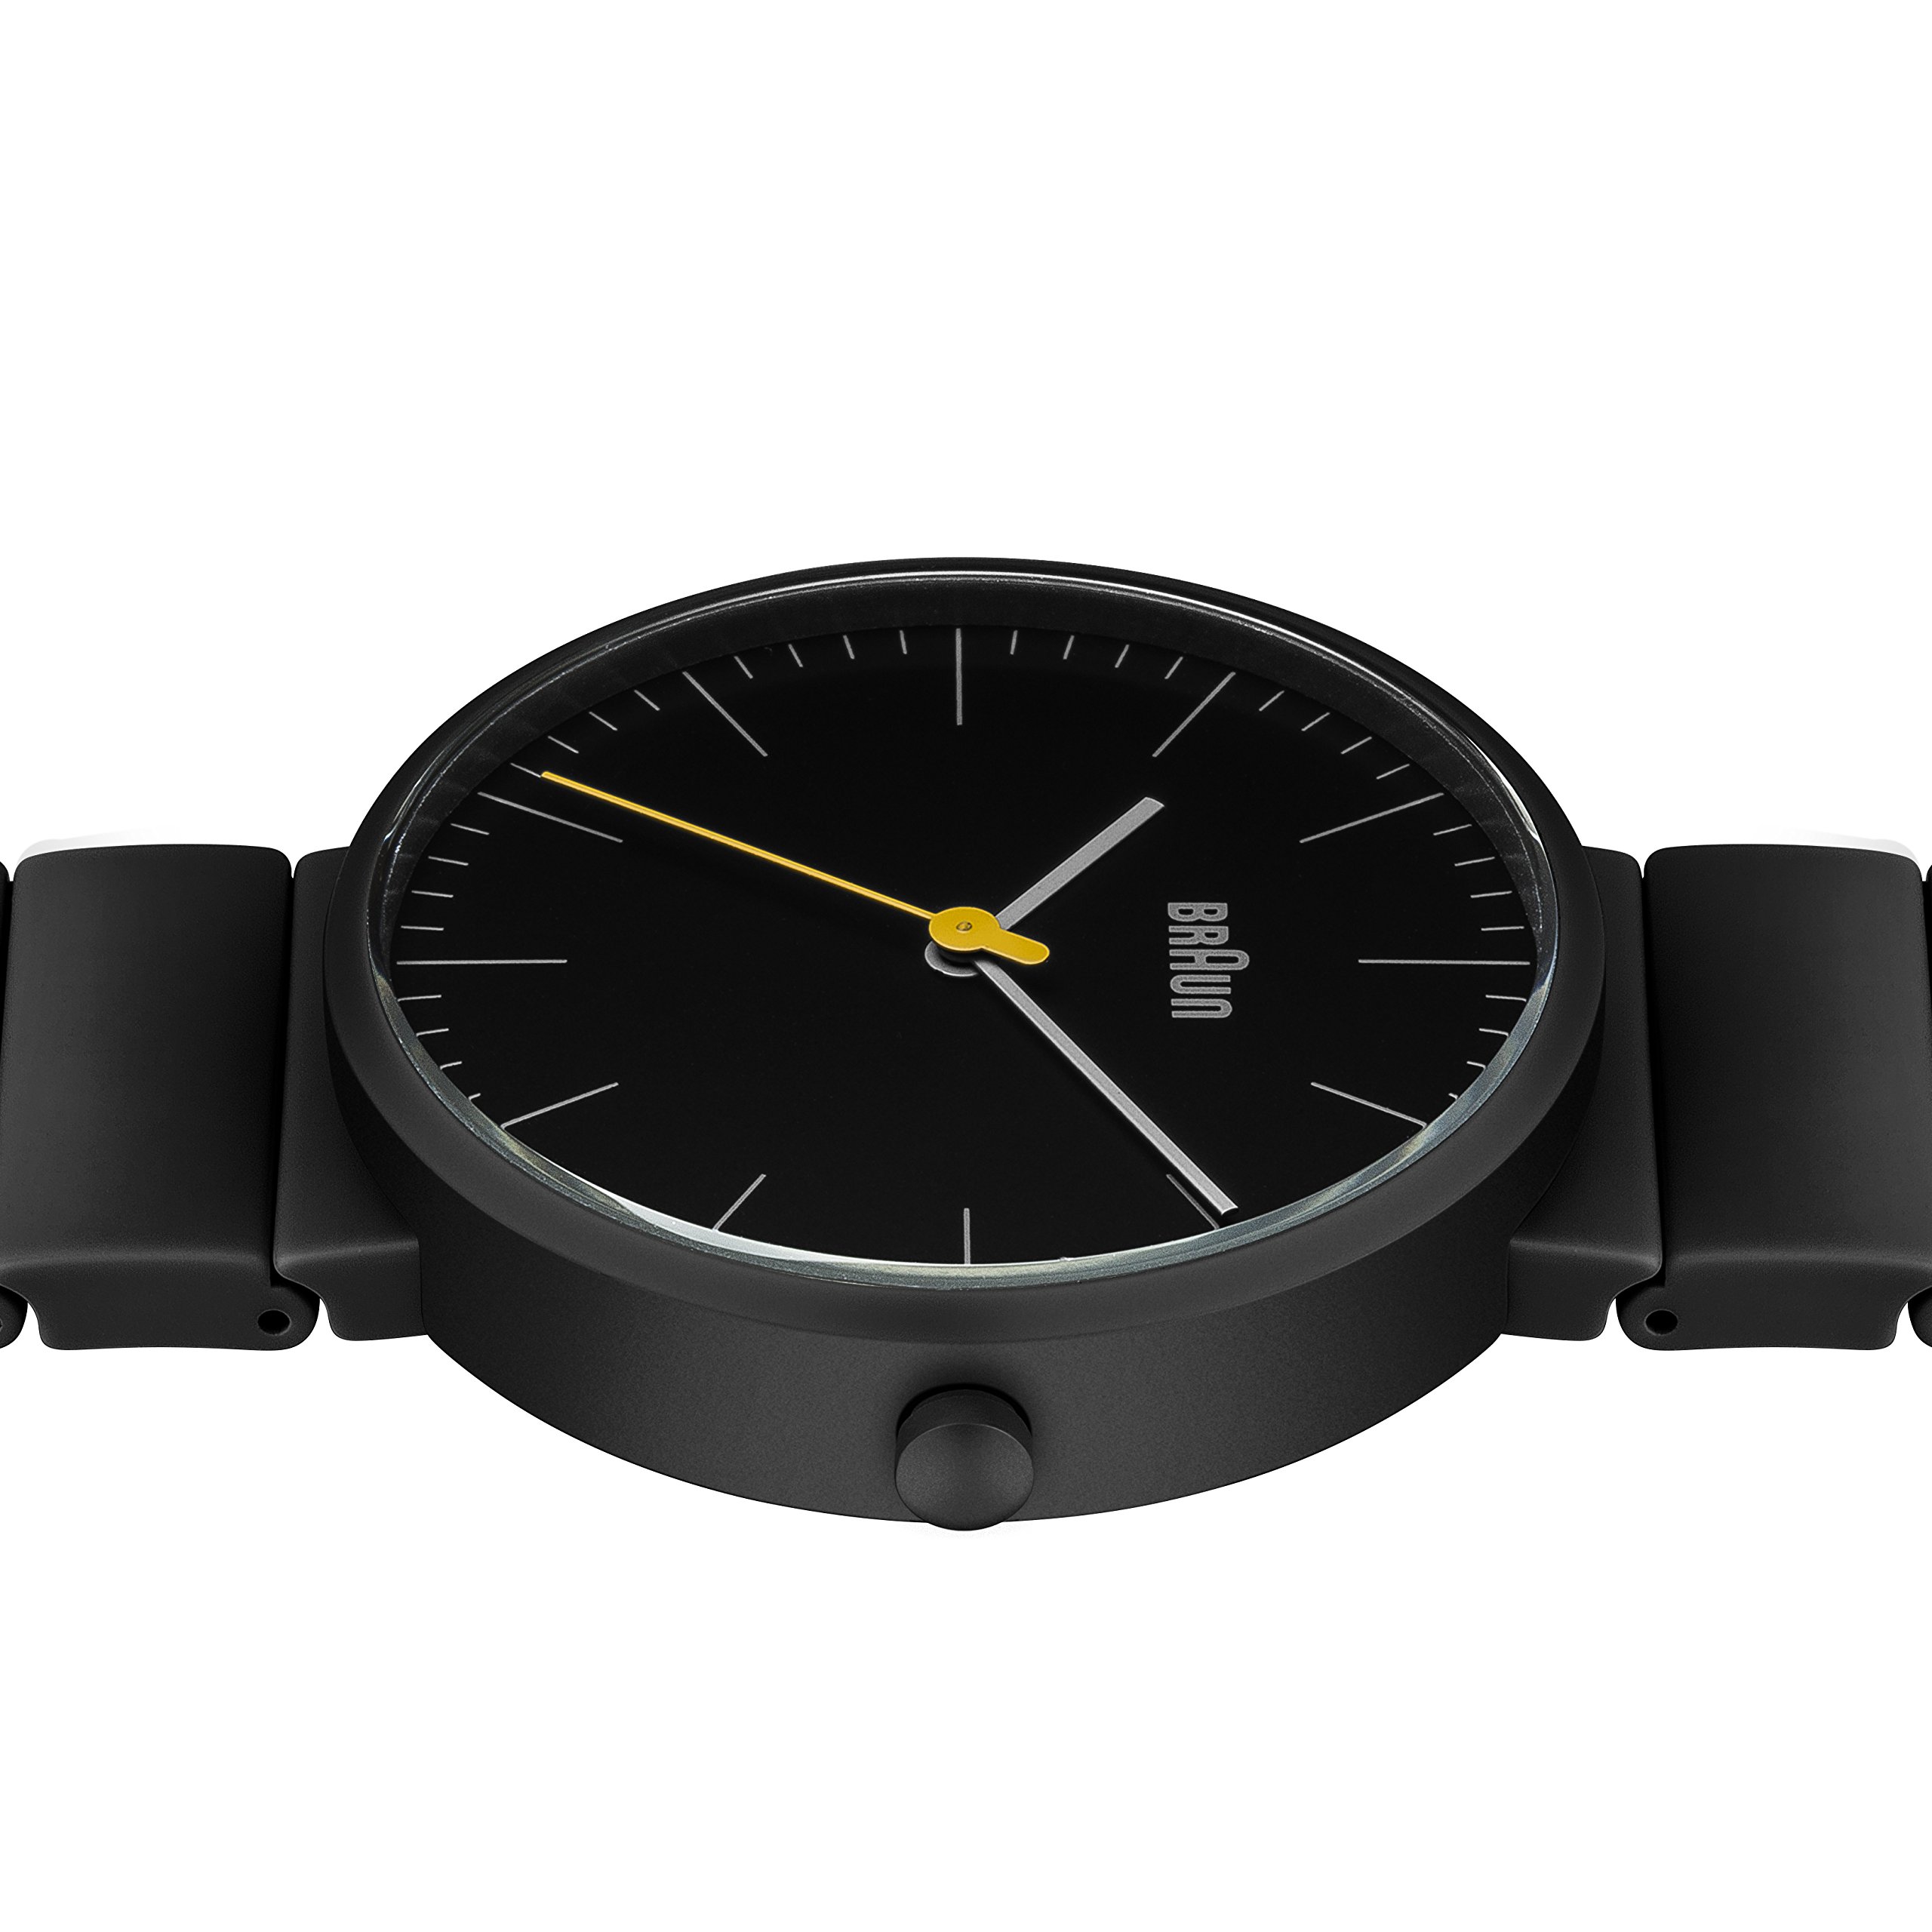 Braun Men's BN0171BKBKG Ceramic Analog Display Japanese Quartz Black Watch